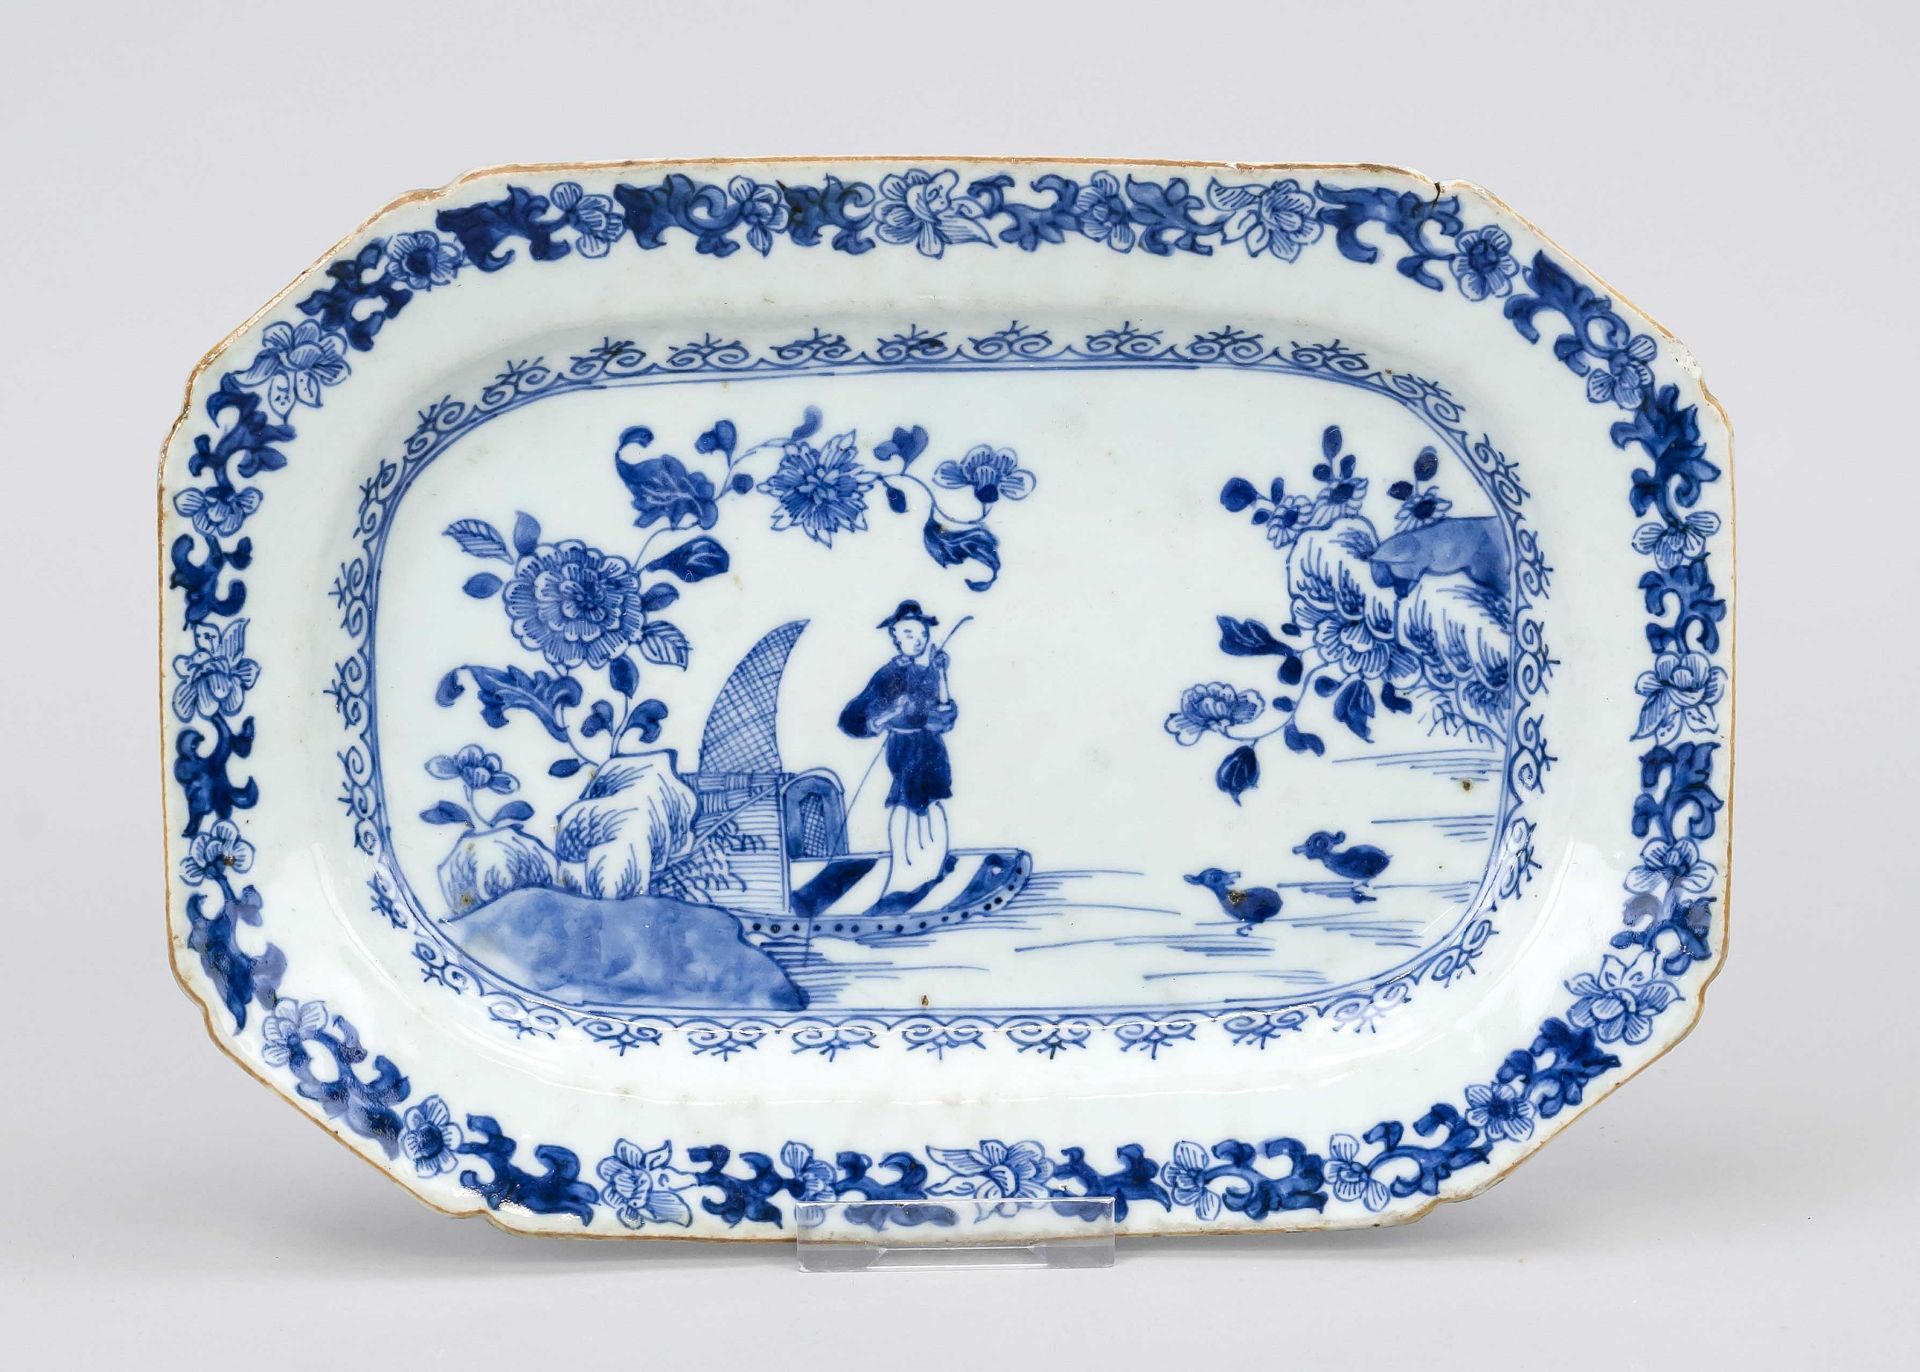 Blau-weiße Platte, China, 18. J